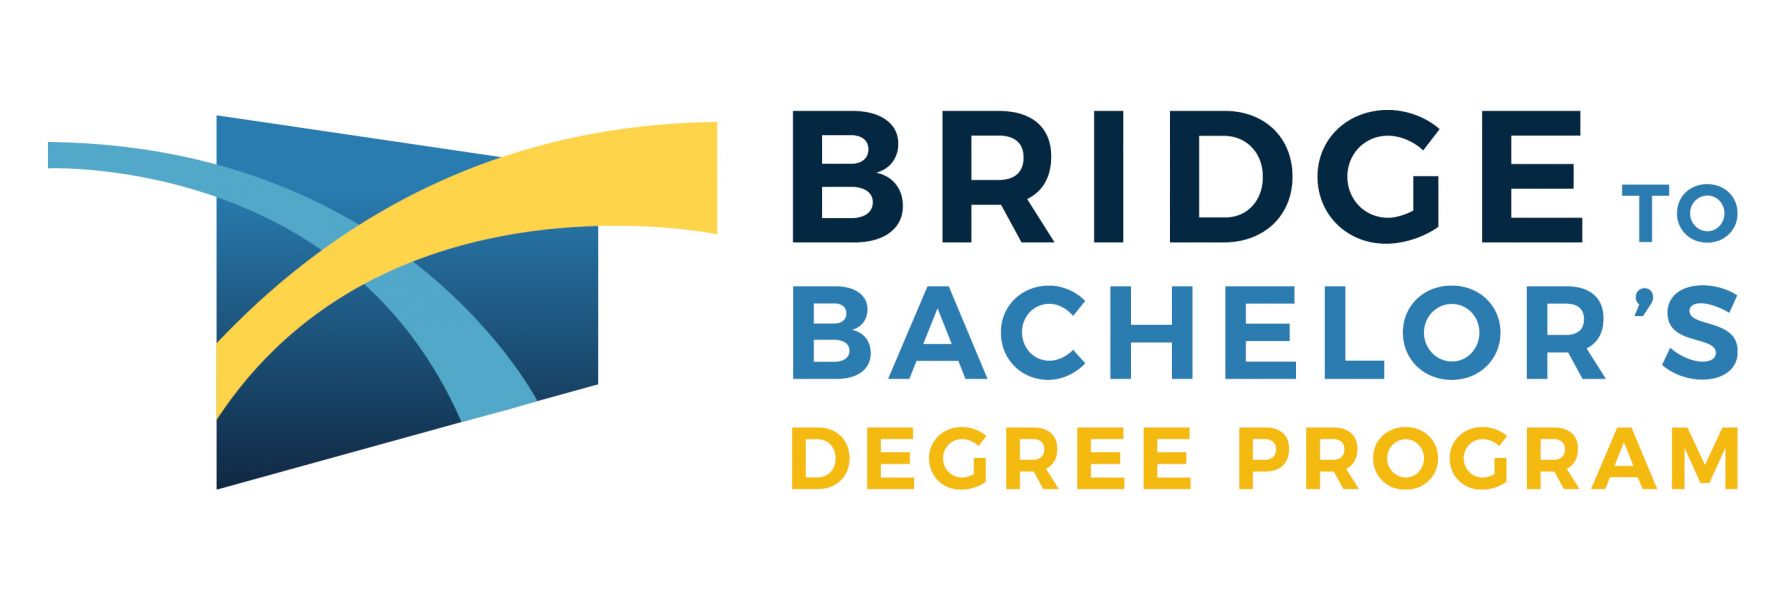 bridge to bachelors logo